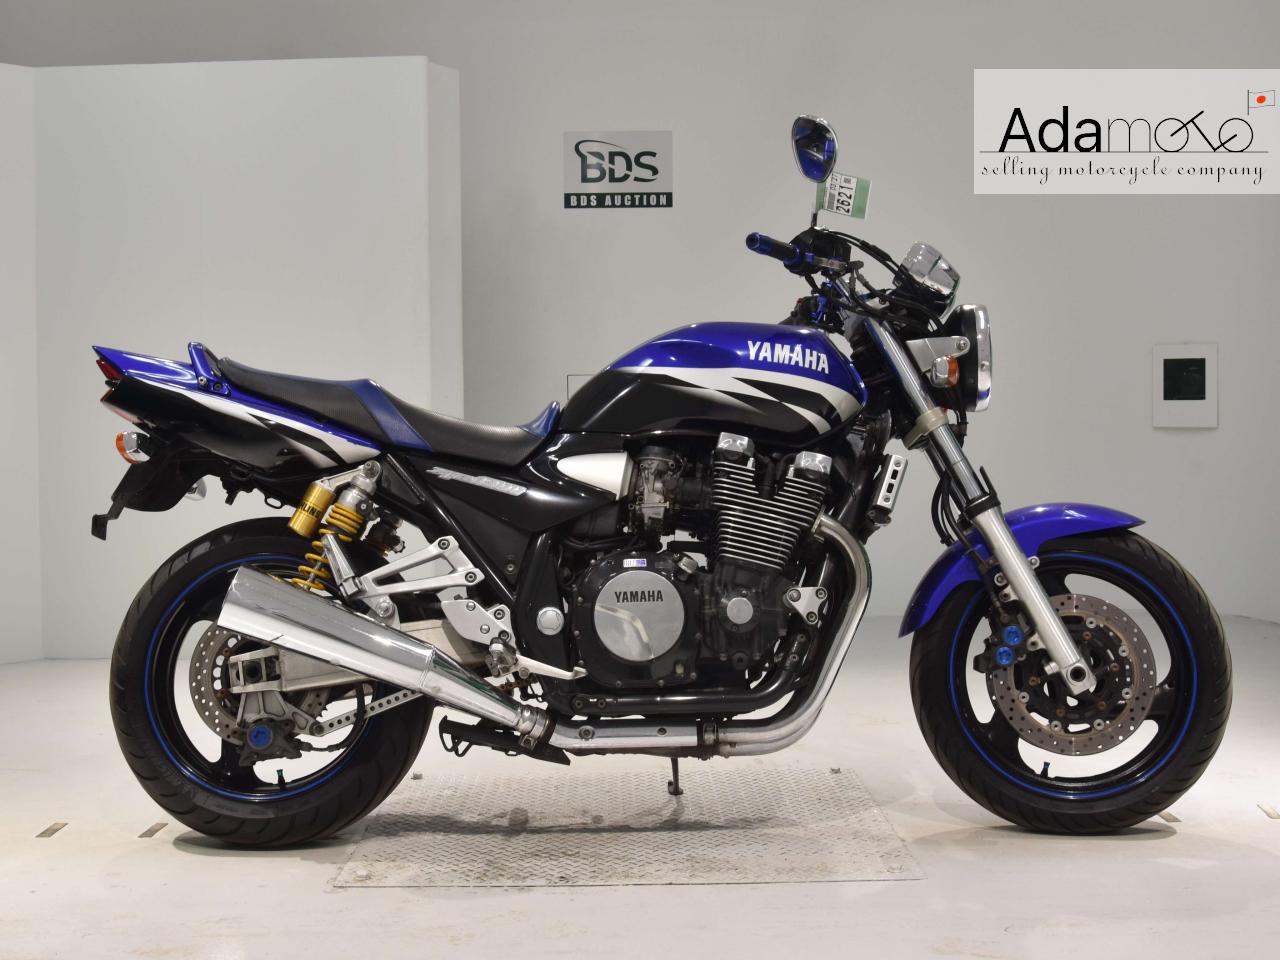 Yamaha XJR1300 - Adamoto - Motorcycles from Japan